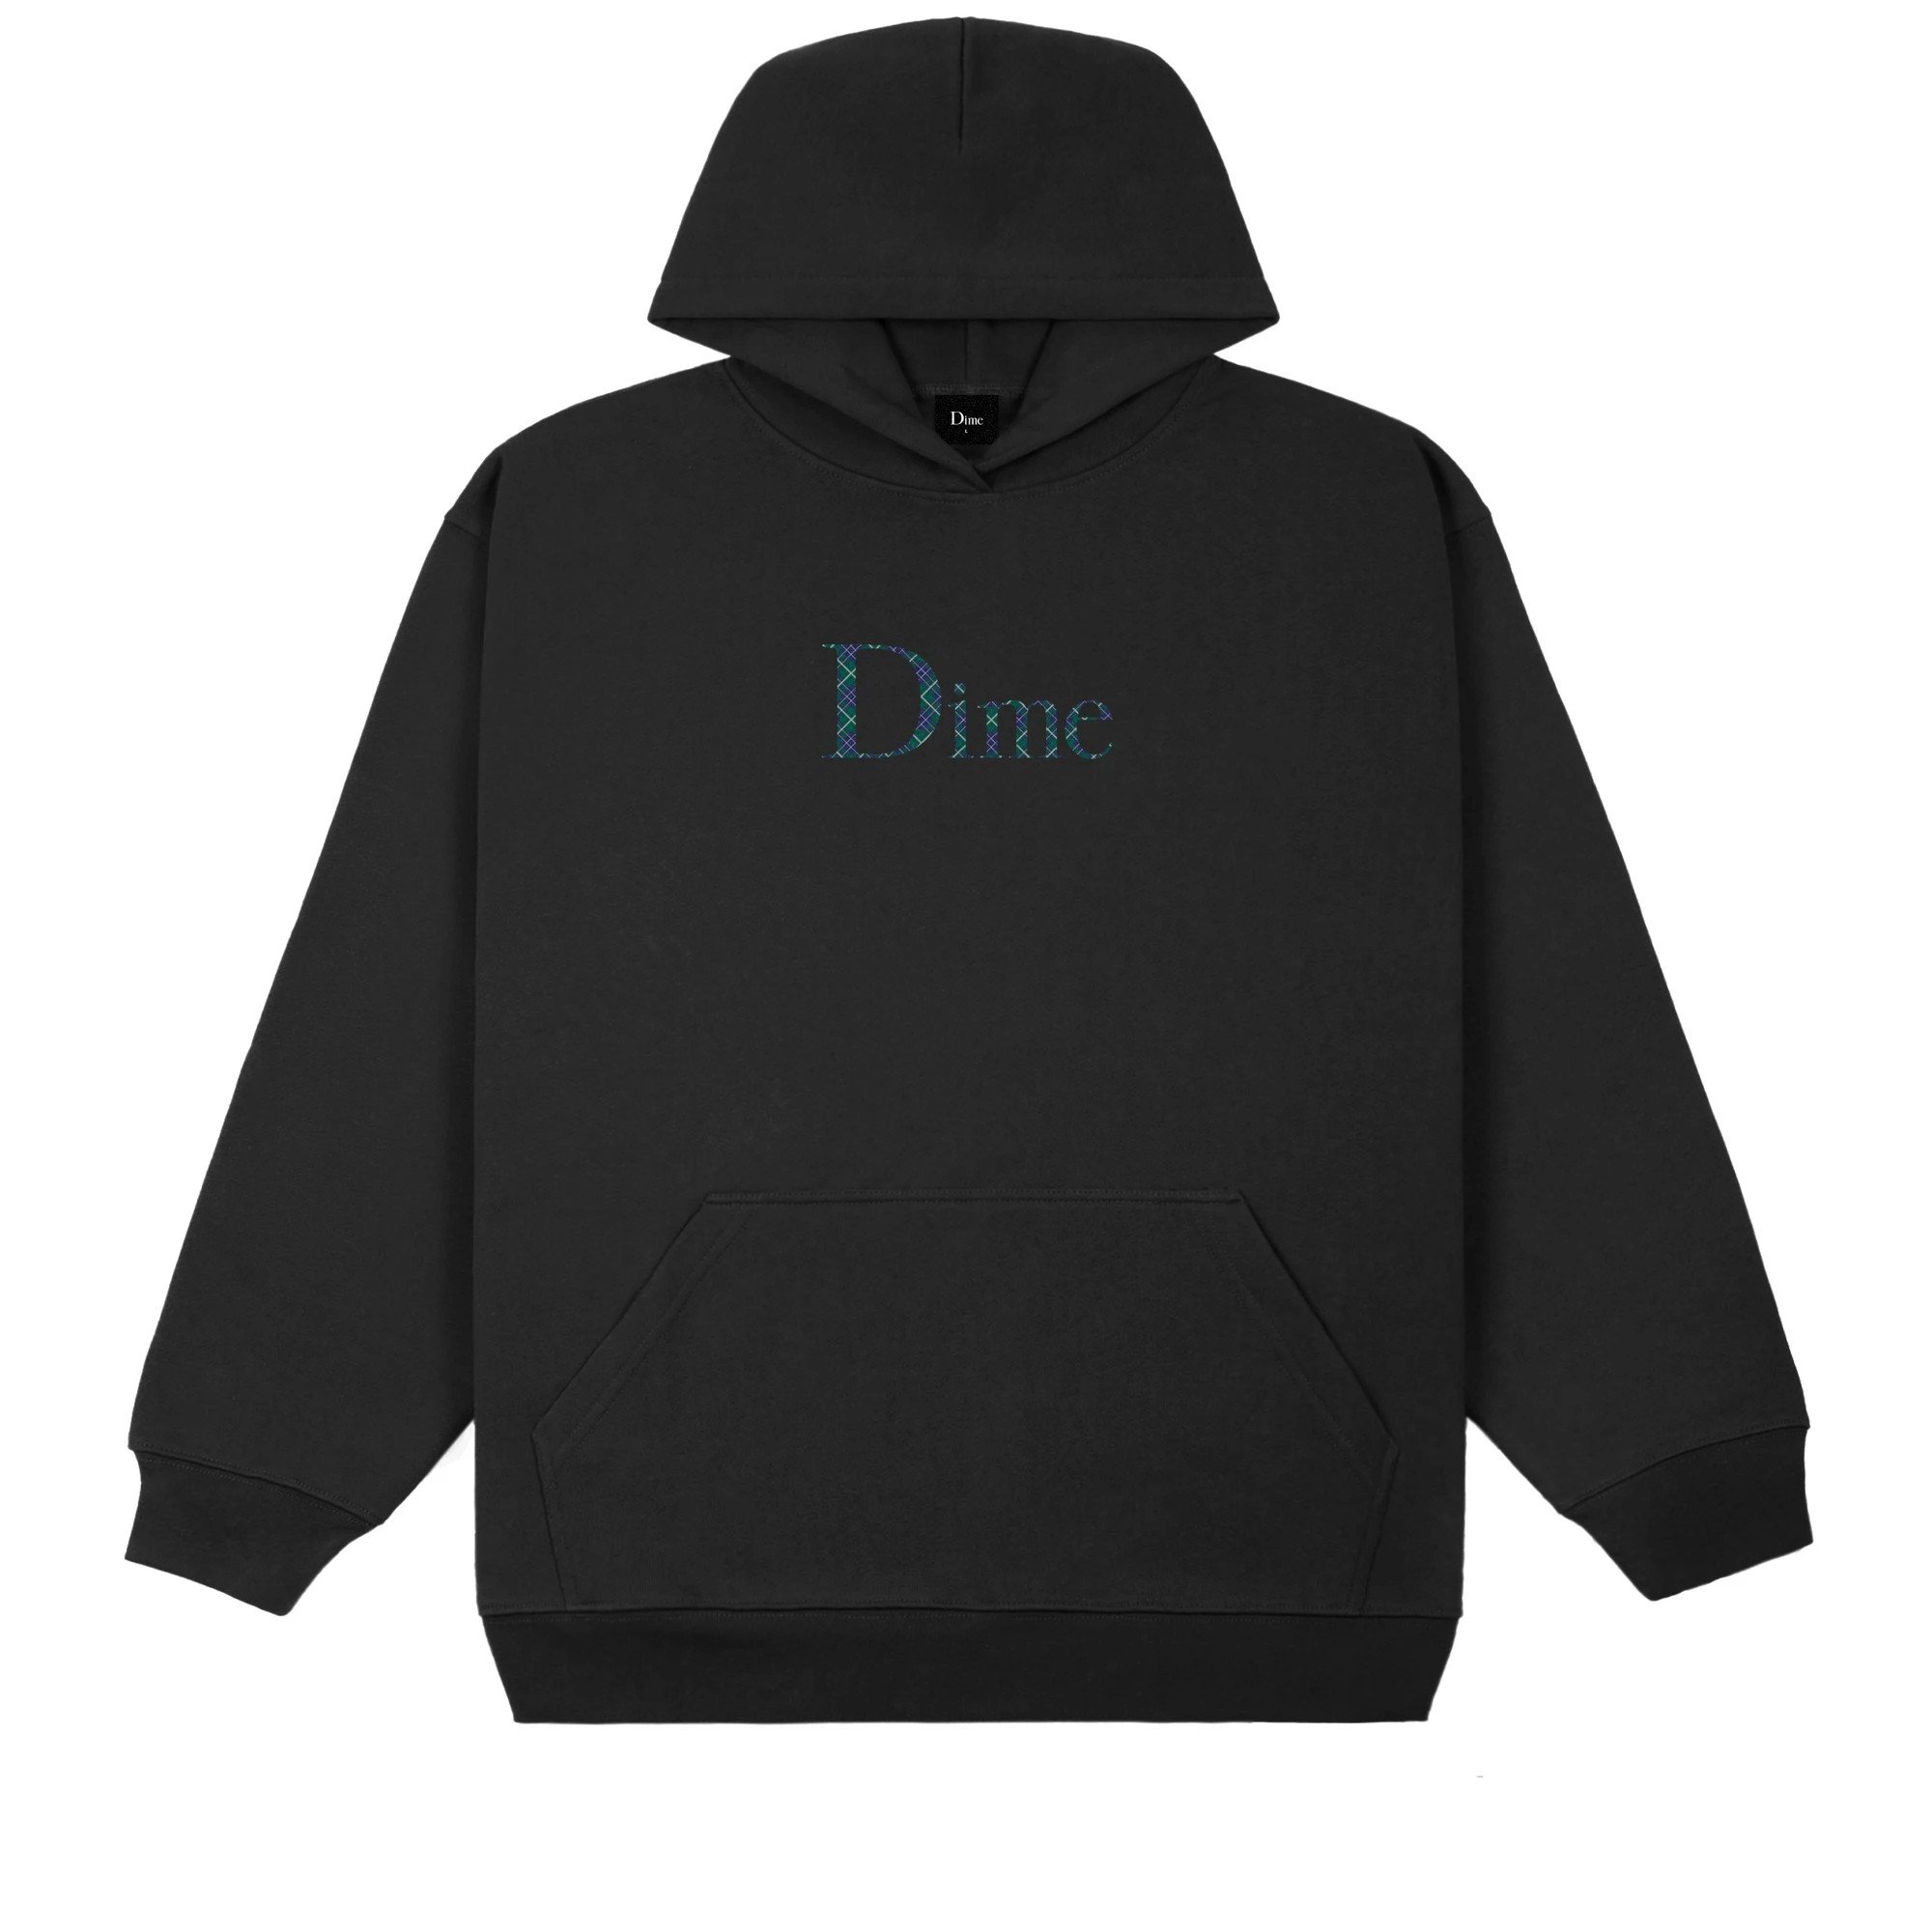 Dime Classic Plaid Pullover Hooded Sweatshirt (Black) - DIMES7010BLK ...